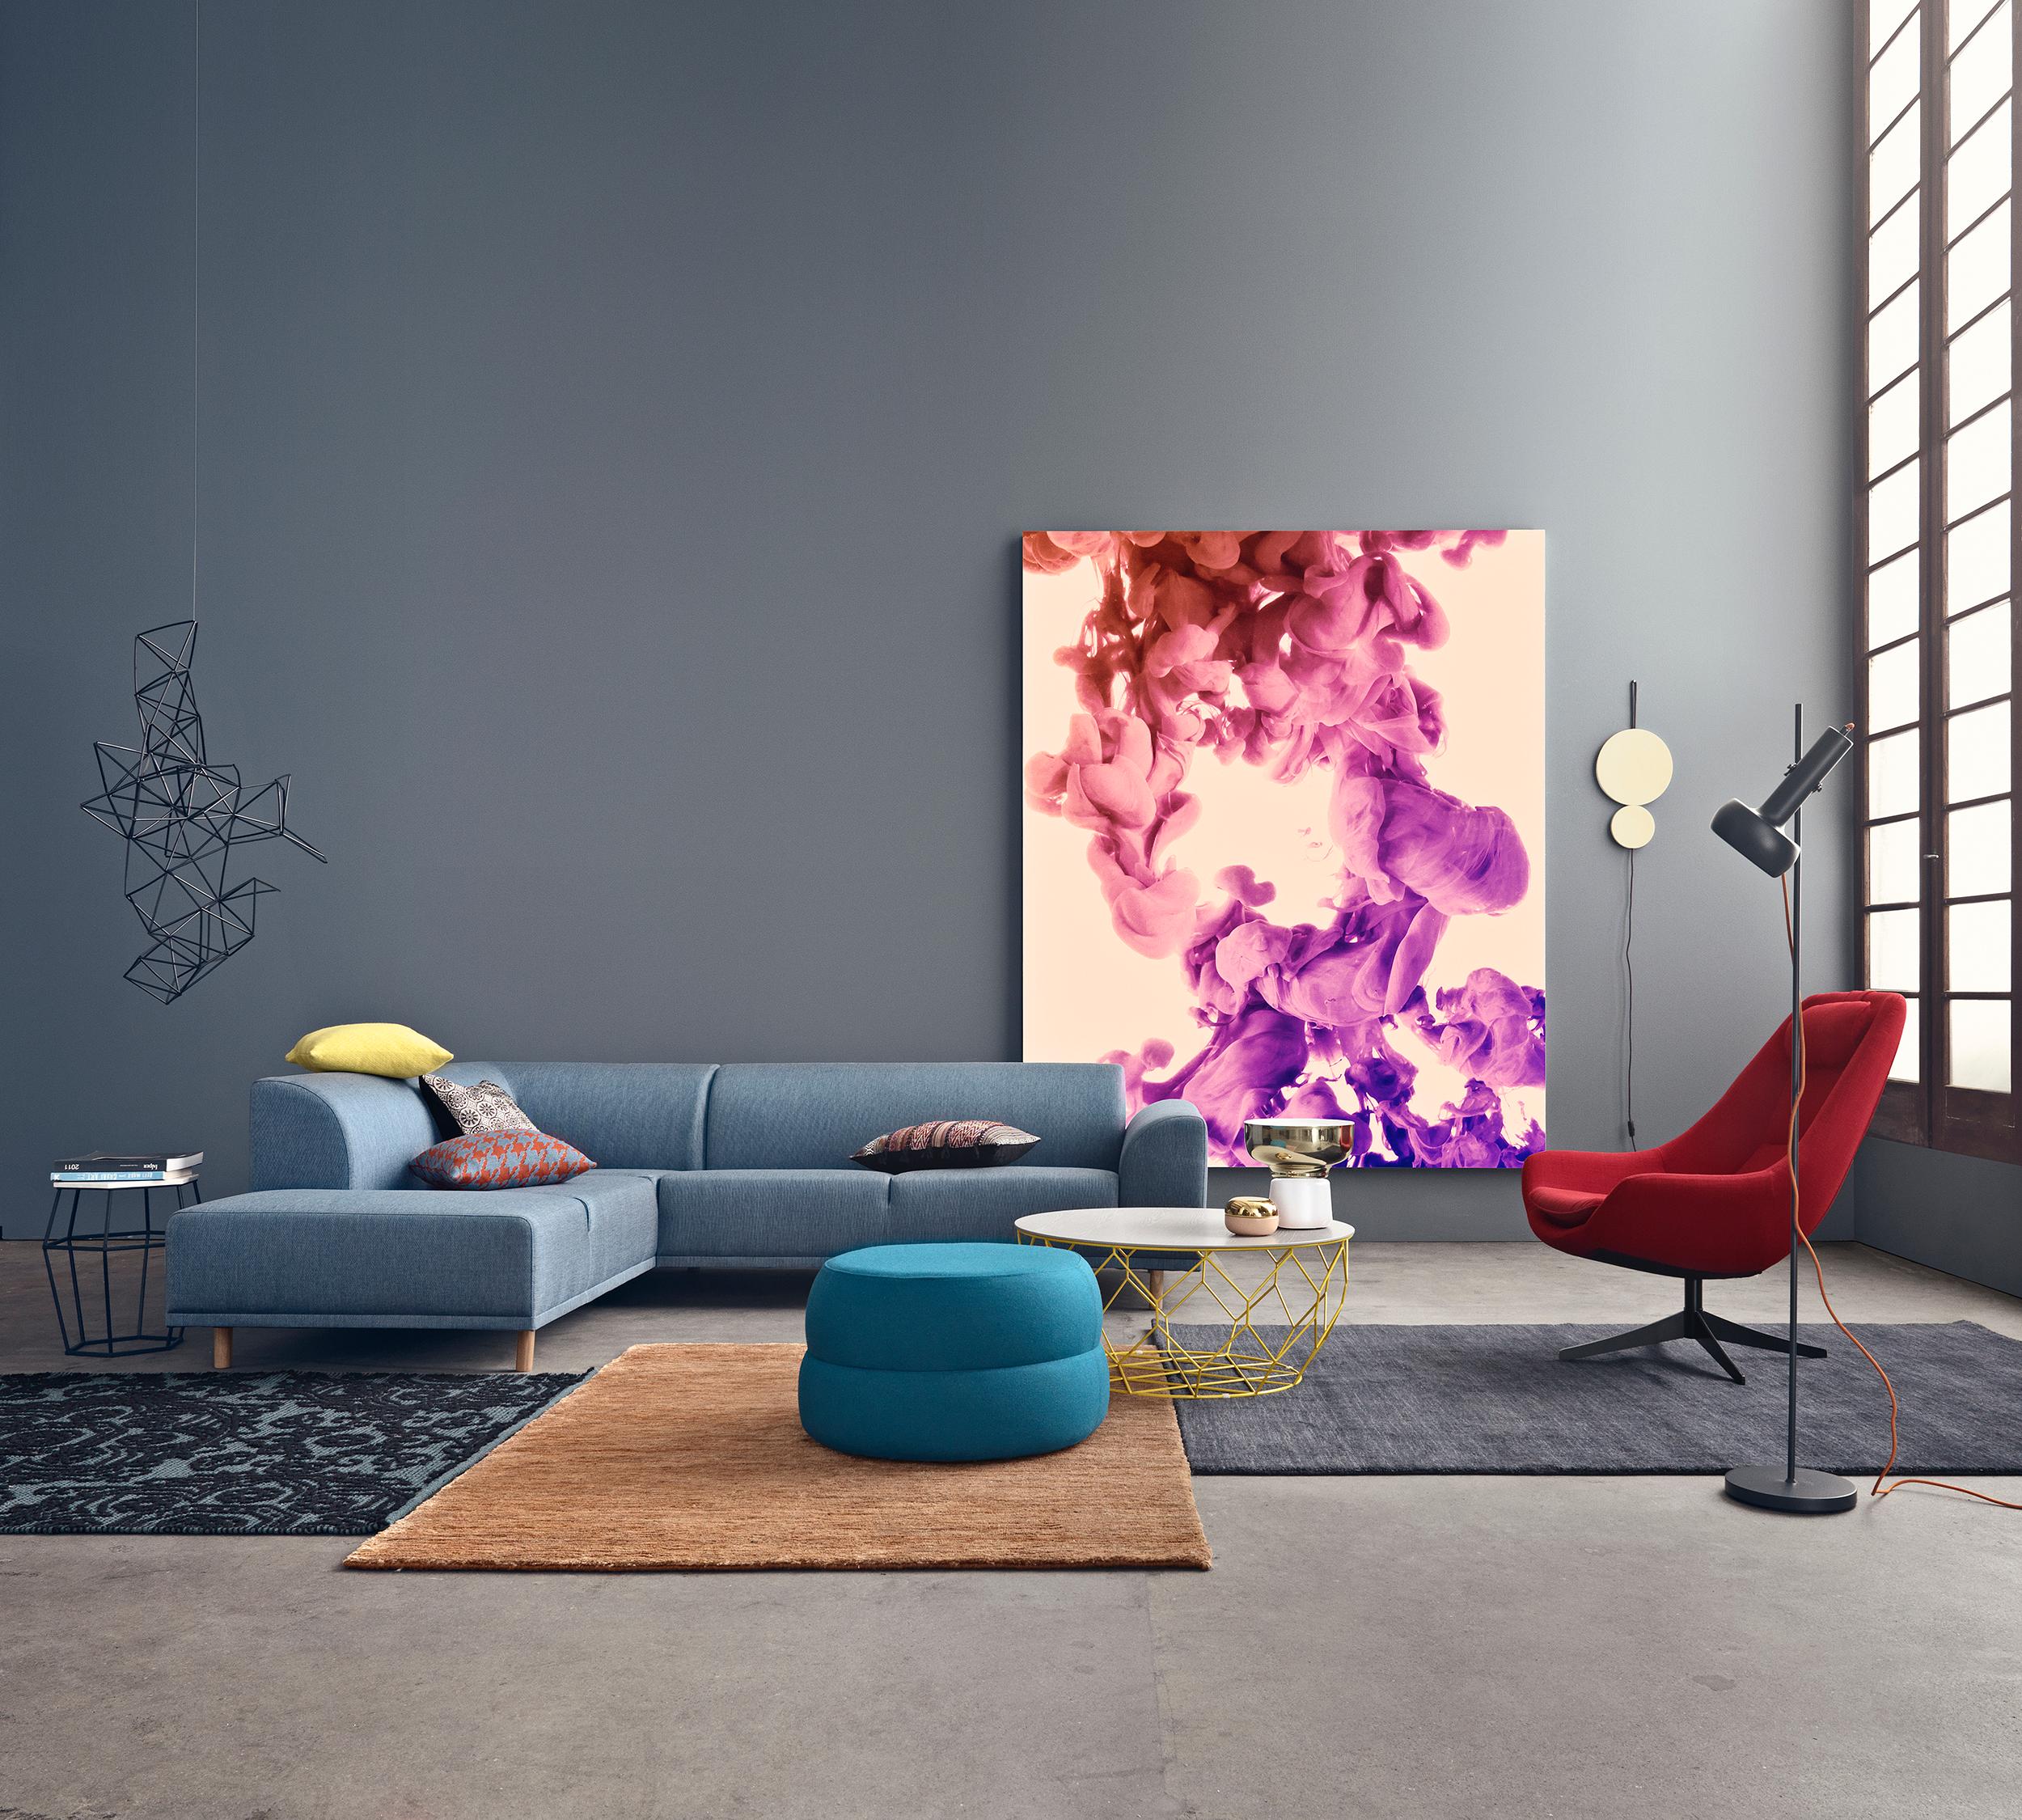 Buntes Bild vor einer grauen Wand #wandfarbe #sessel #kissen #rotersessel #grauewandfarbe #hohesfenster ©Bolia